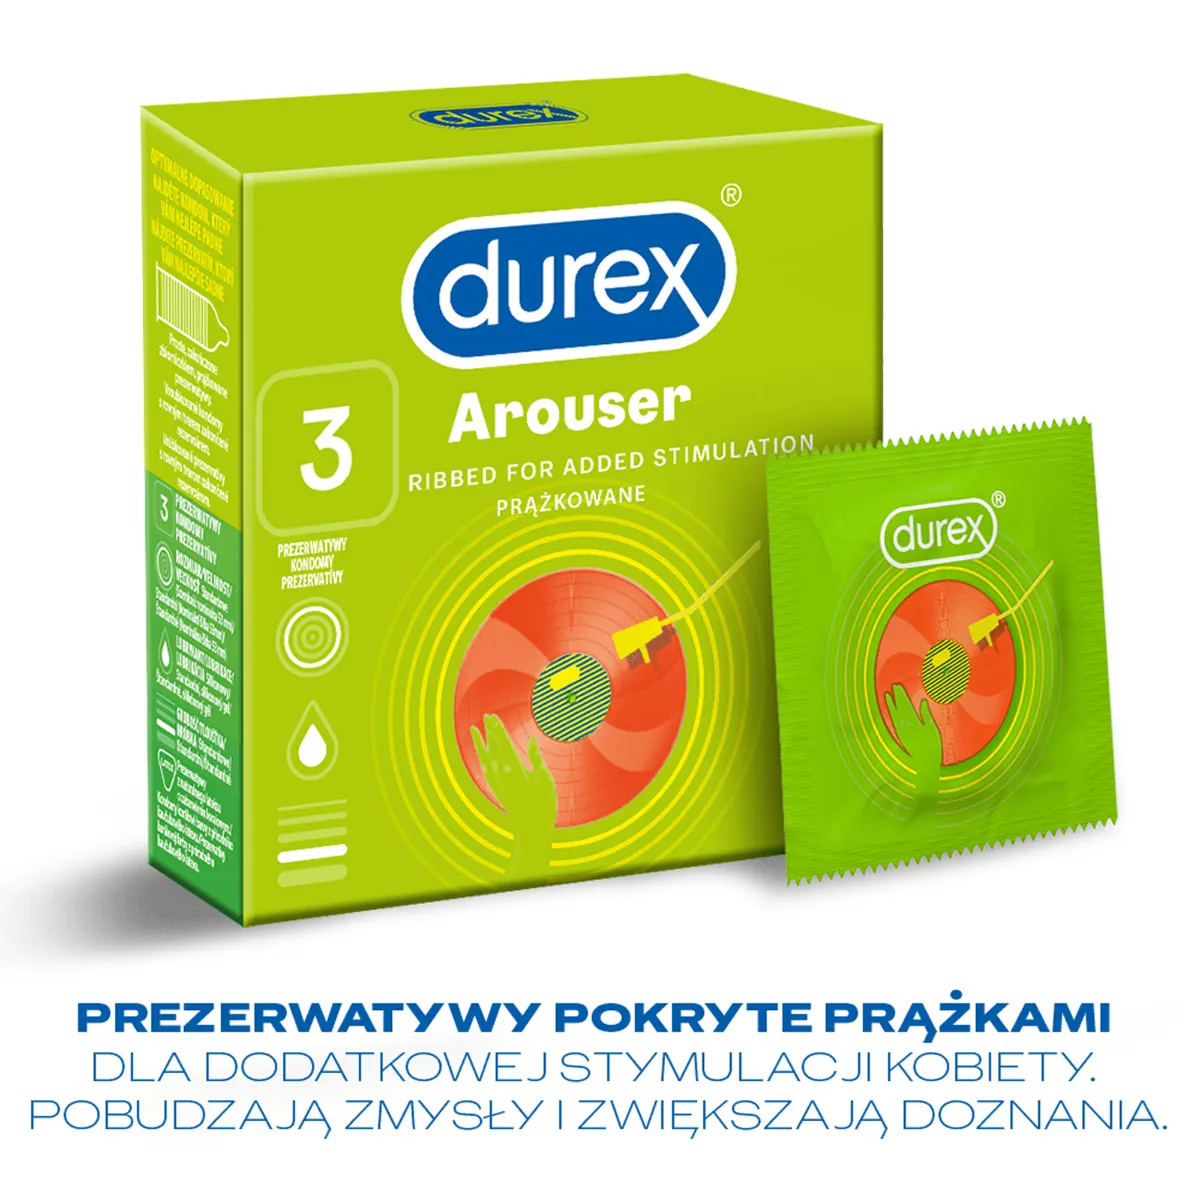 Prezerwatywy Durex Arouser, 3 szt. 